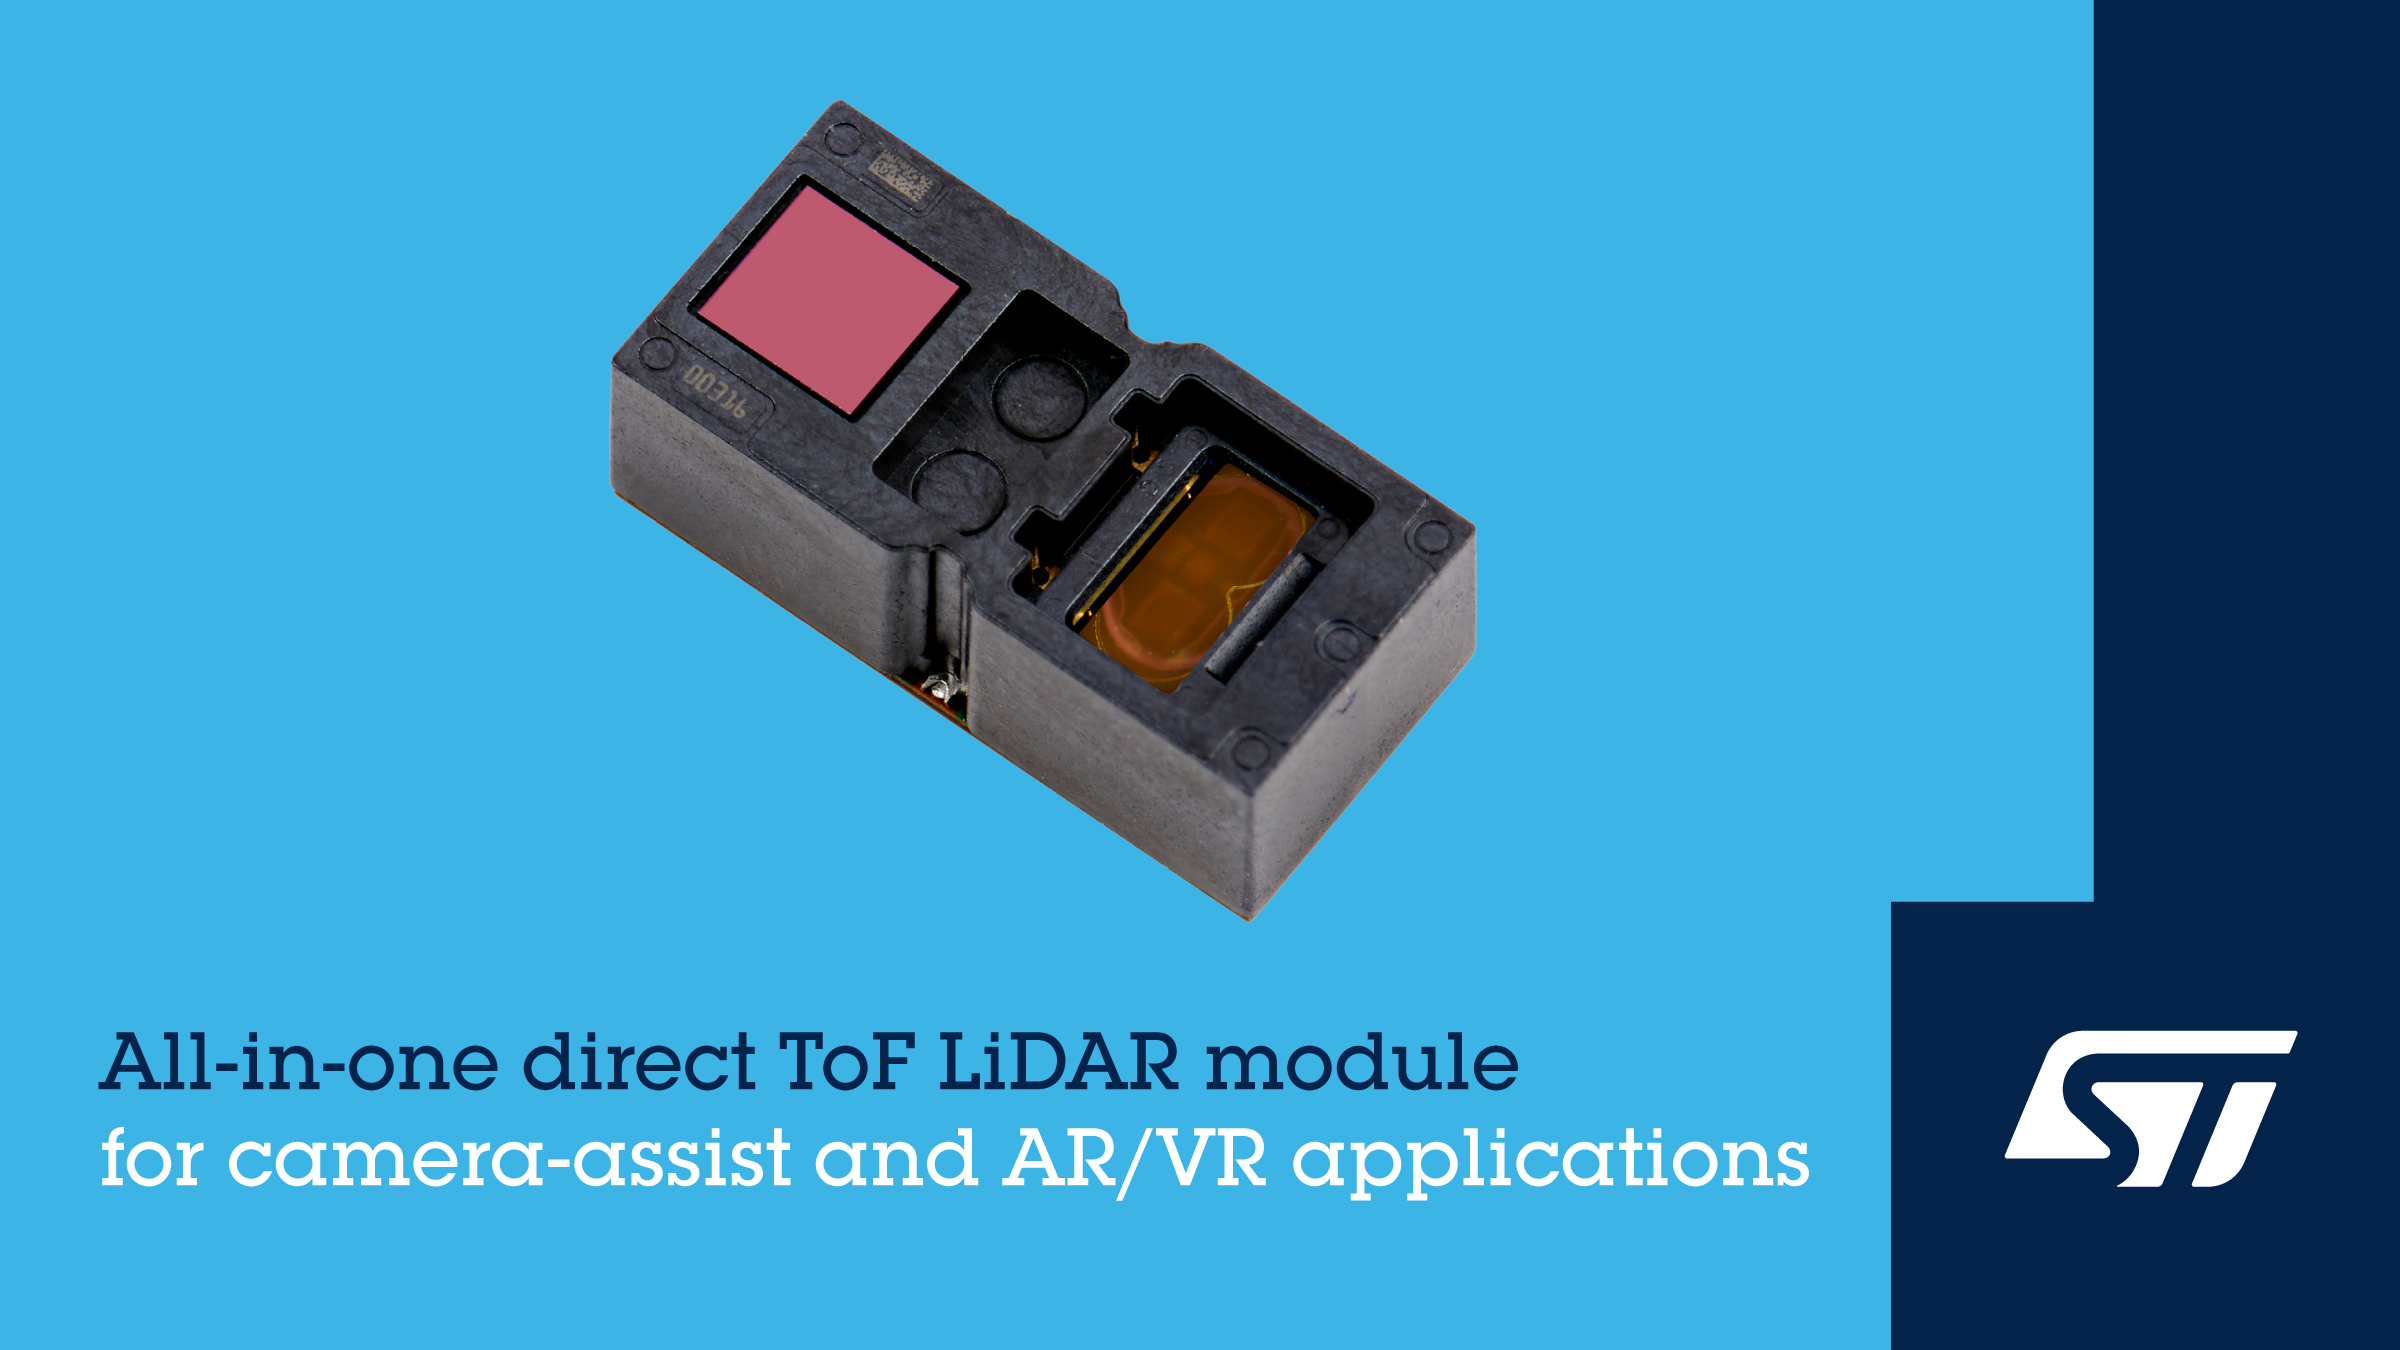 ST ToF 3D LiDAR module has 2.3k resolution